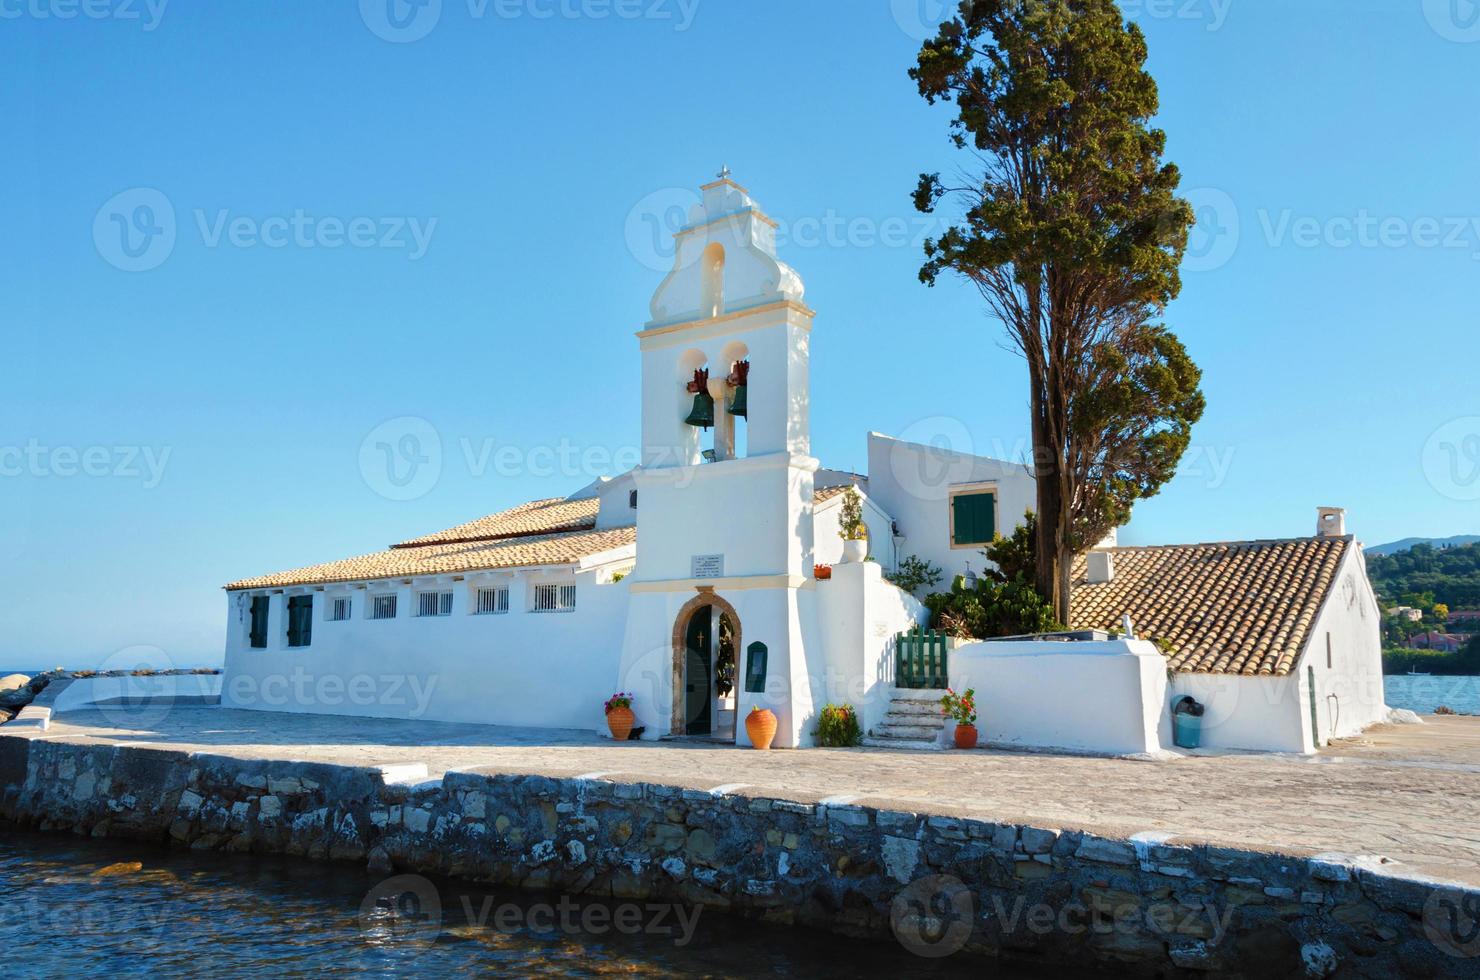 klein ortodox klooster op het eiland corfu in Griekenland foto